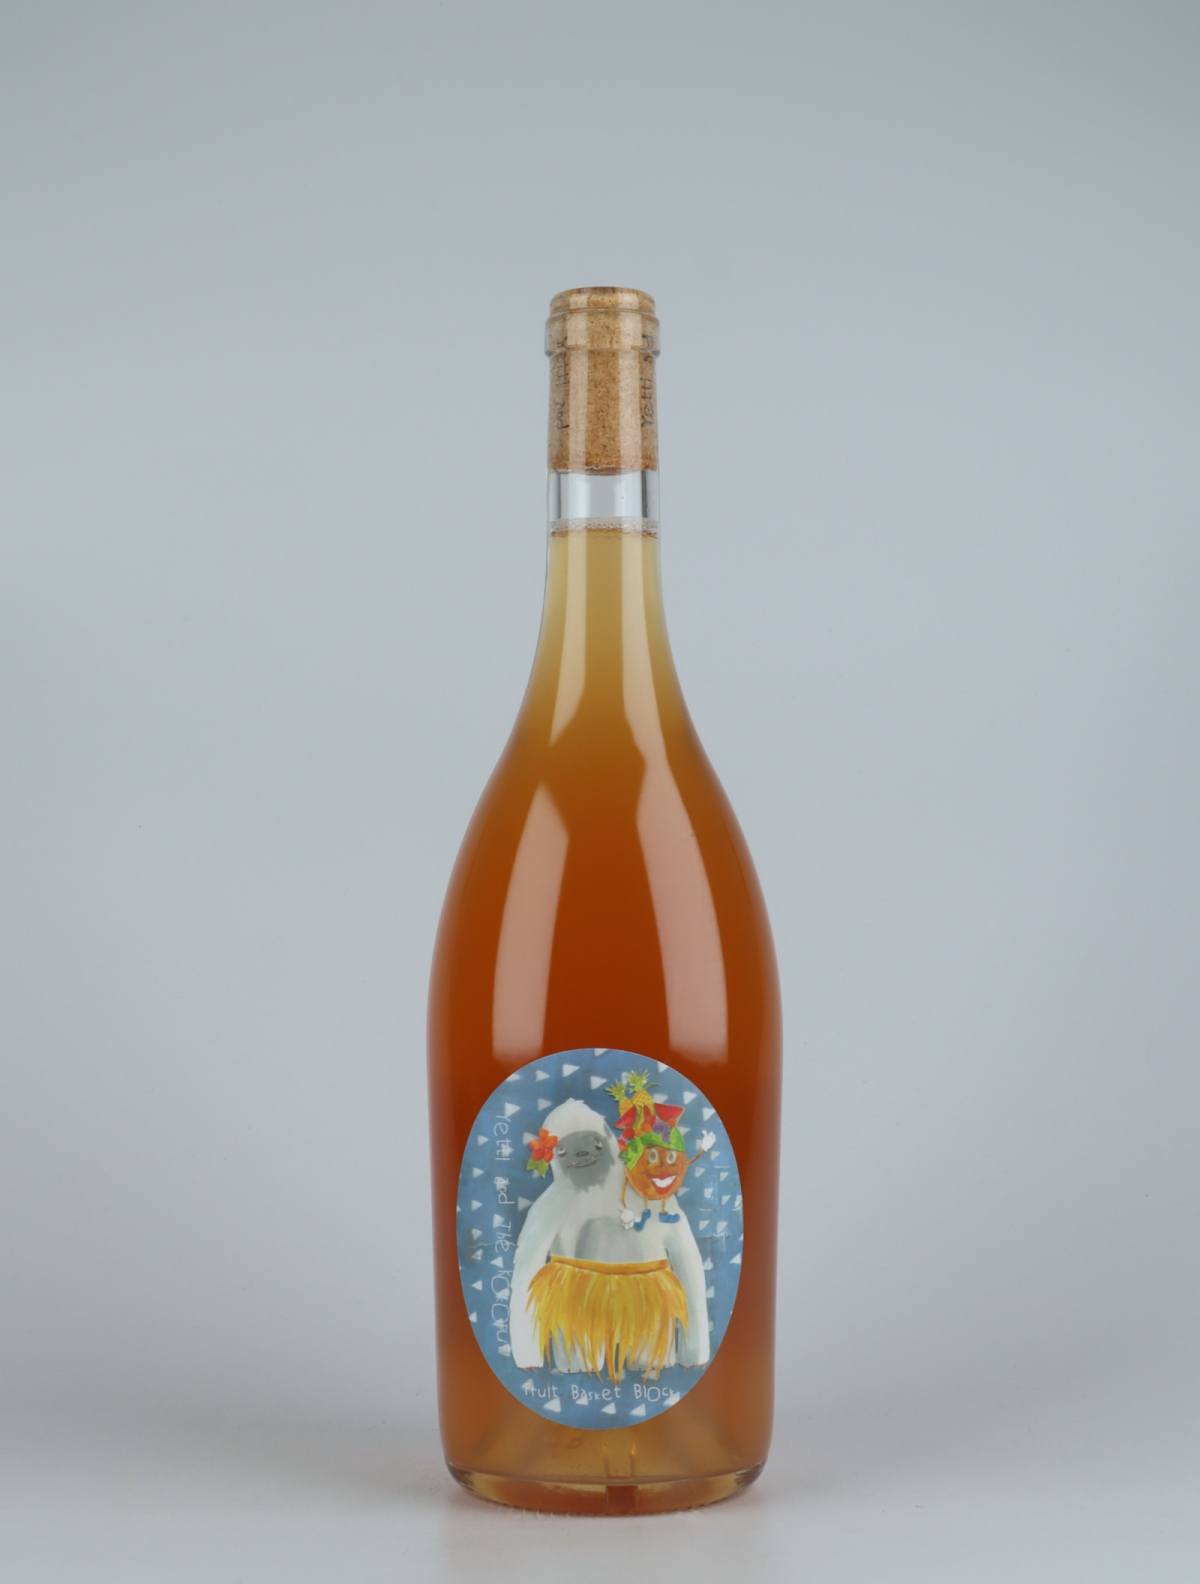 En flaske 2020 Fruit Basket Hvidvin fra Yetti and the Kokonut, Barossa Valley i Australien